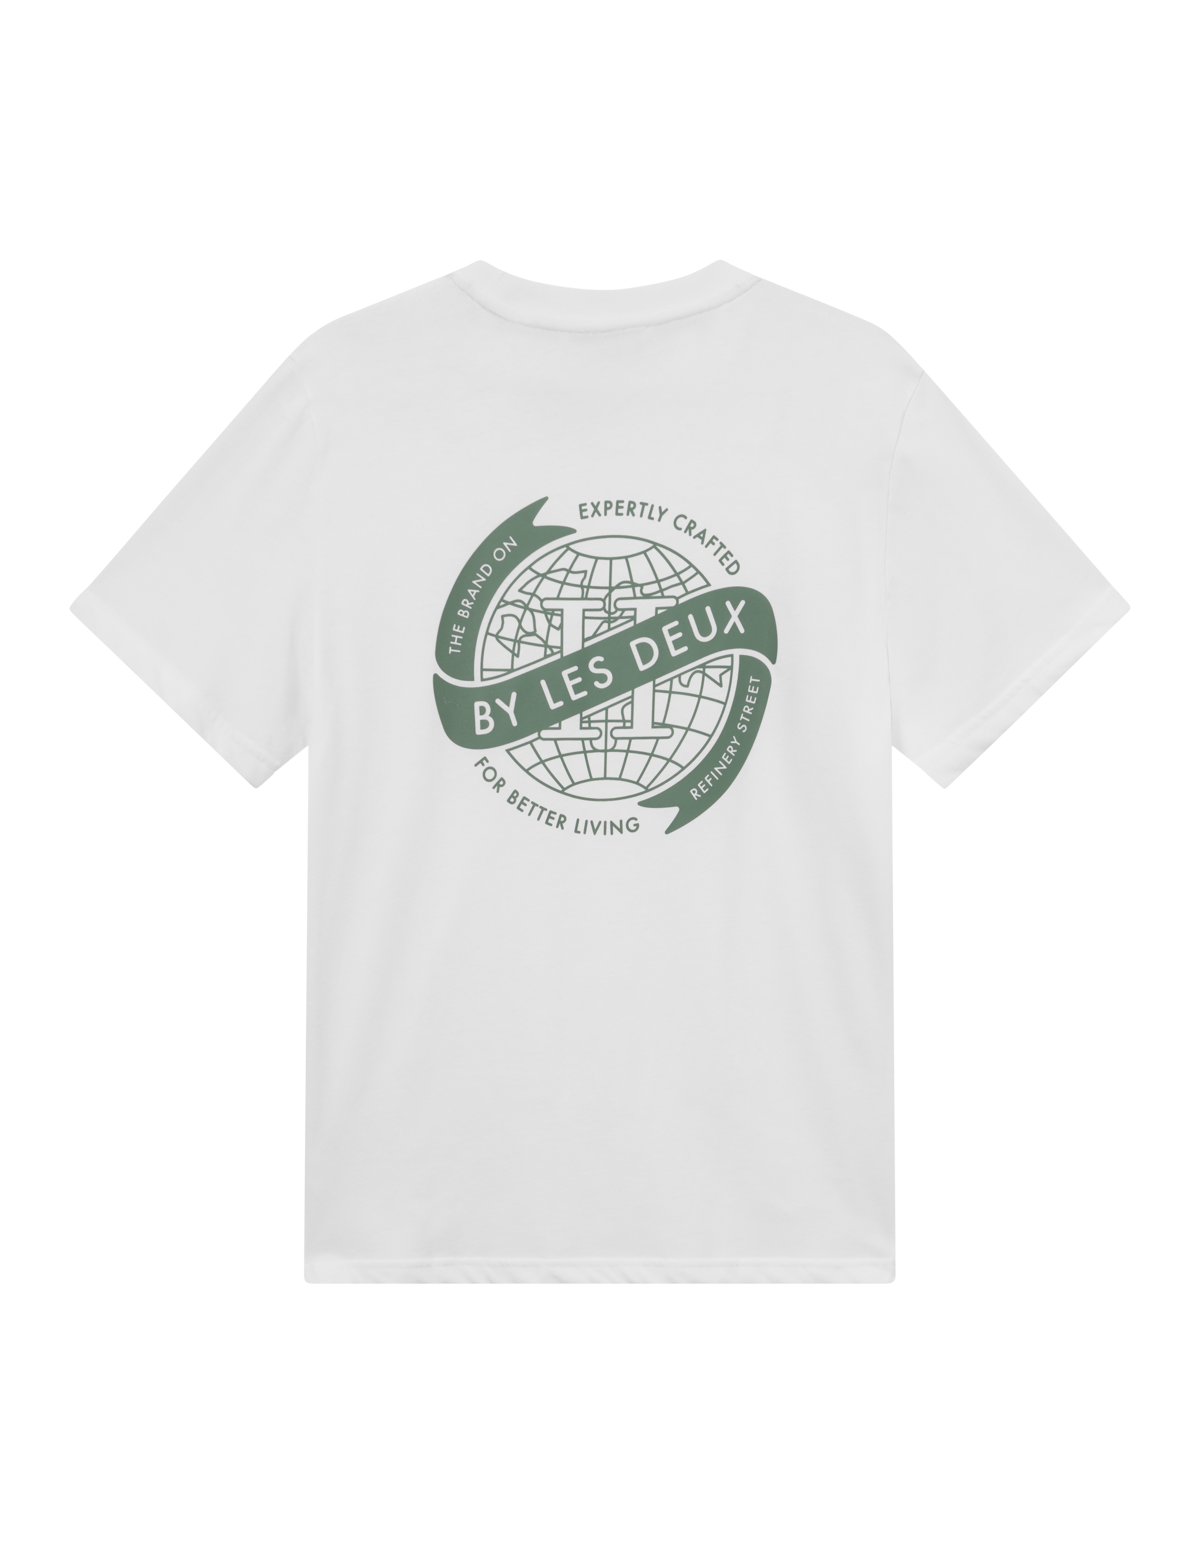 Globe T-Shirt